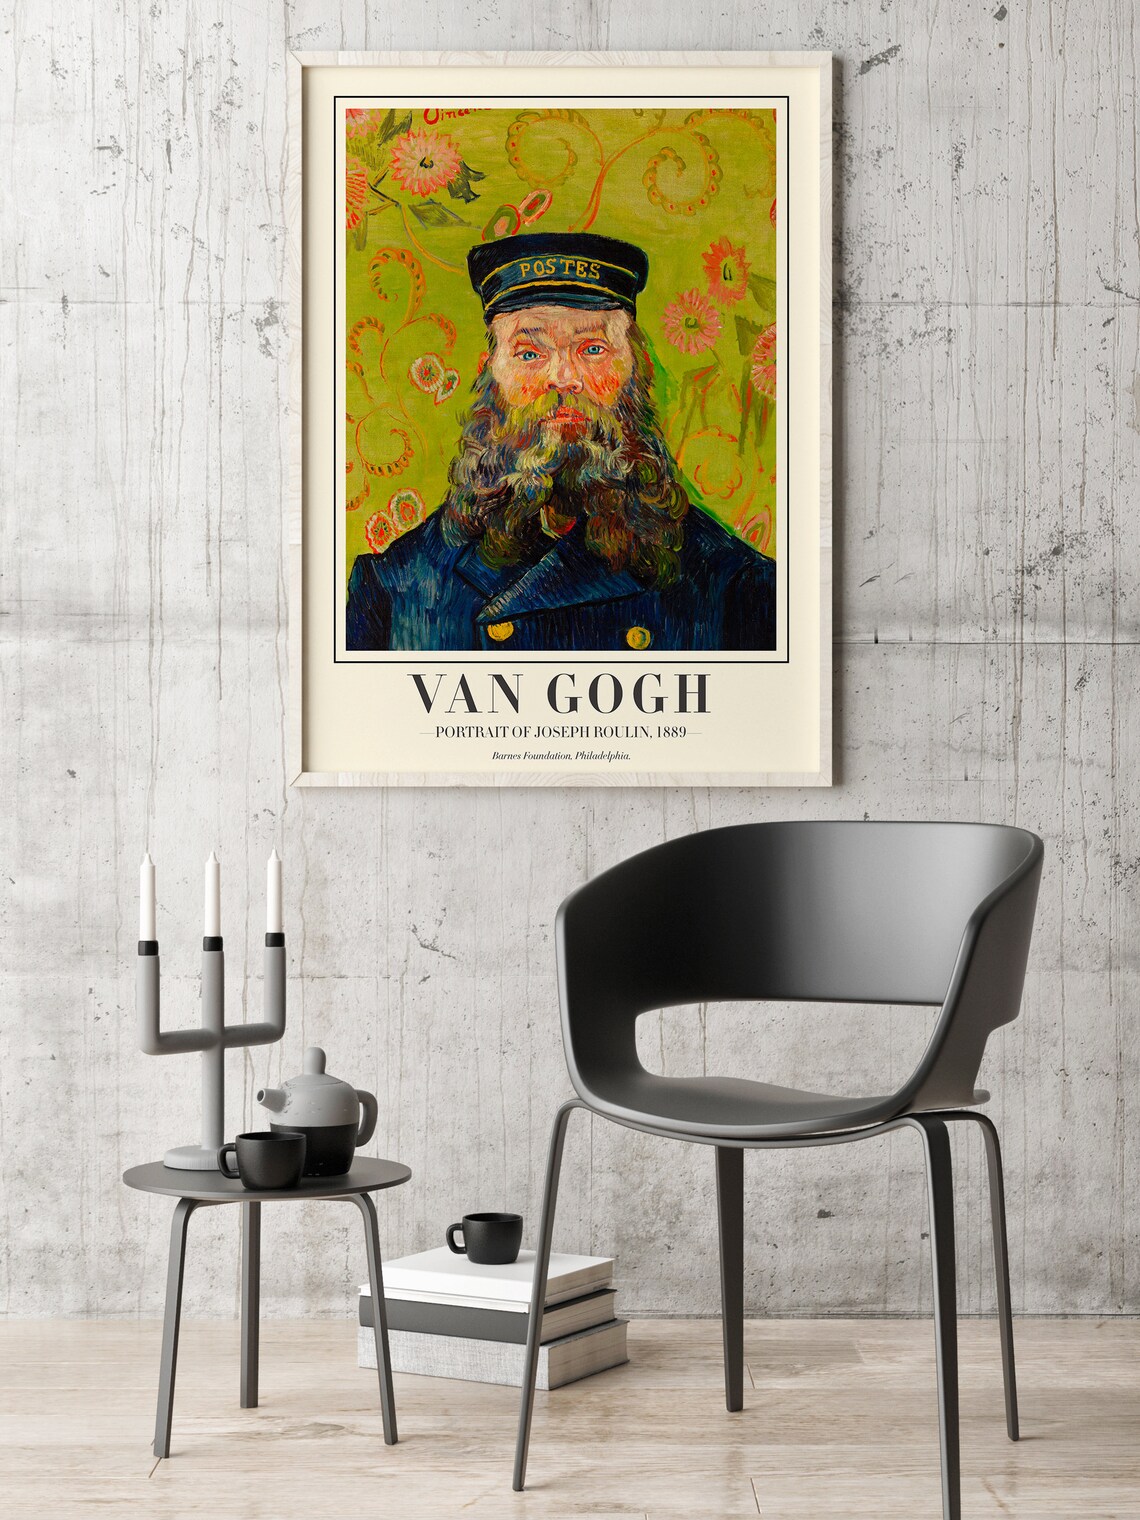 Van Gogh 1889 the Postman Roulin Exhibition Poster Vincent - Etsy